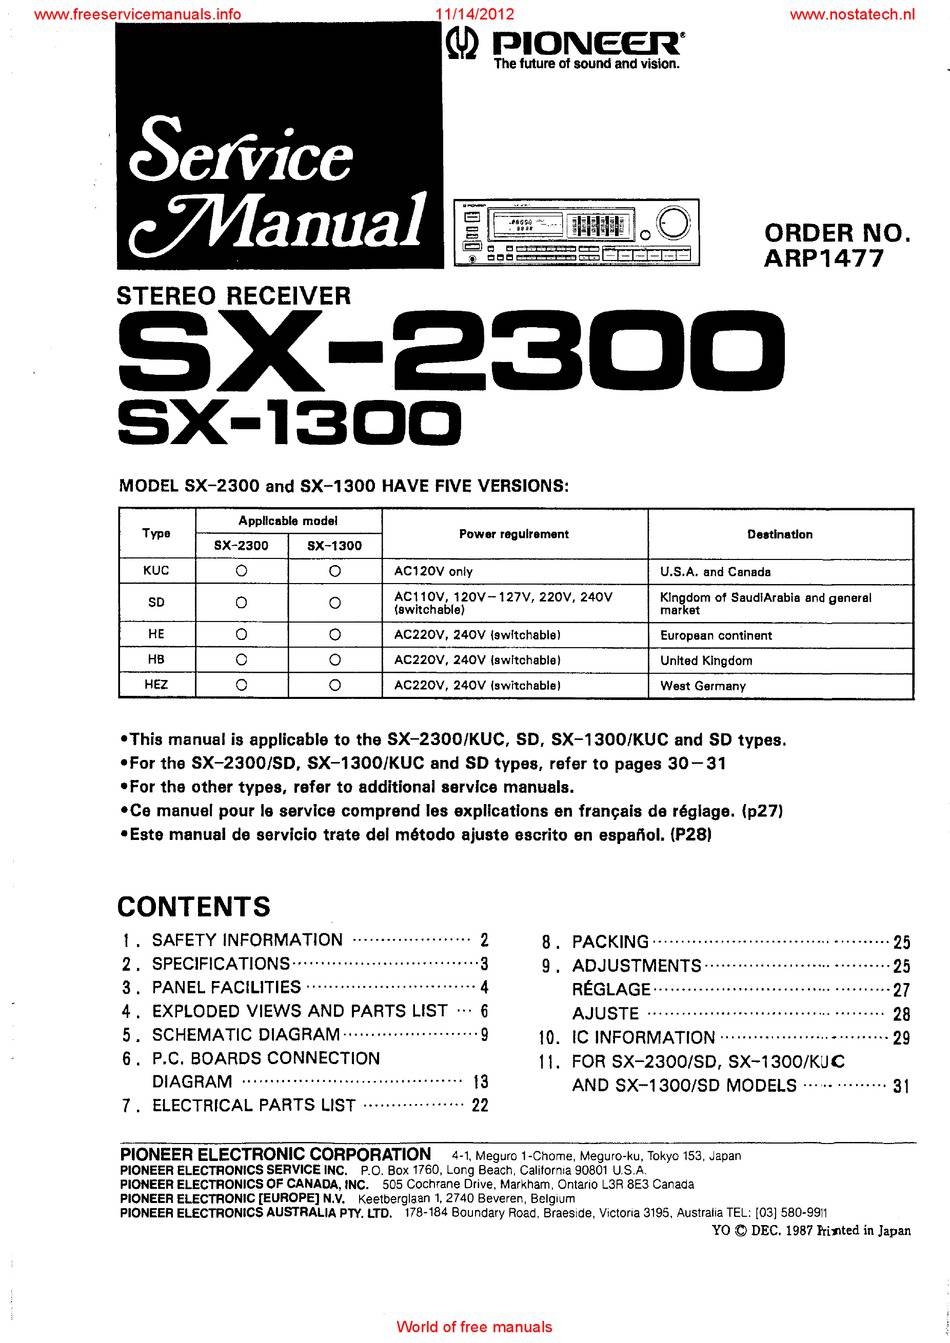 Pioneer SX-2300